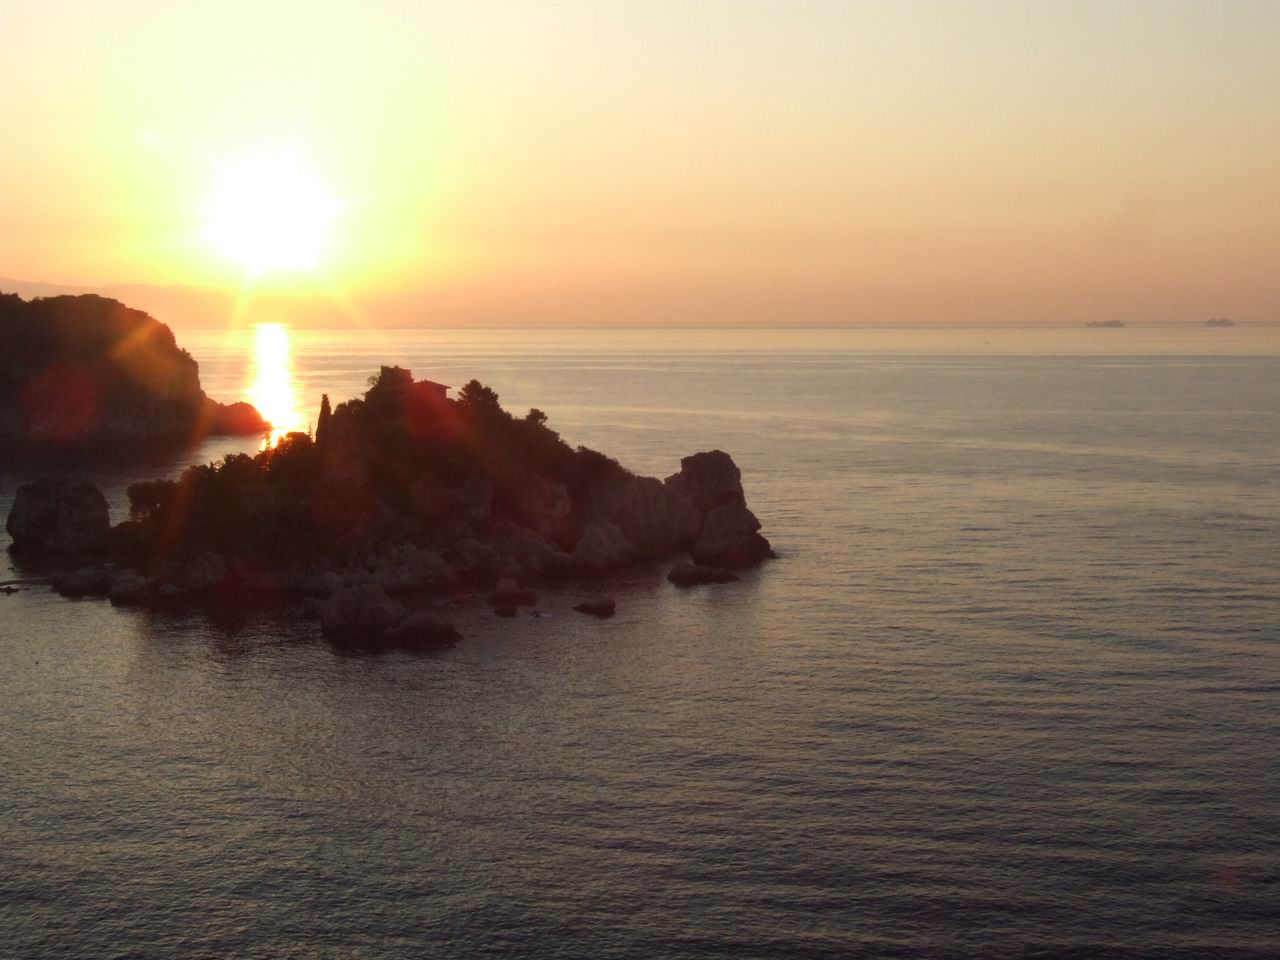 Dawn Sunset-Isola Bella-Taormina-Sicilia-Italy - Creative Commons by gnuckx